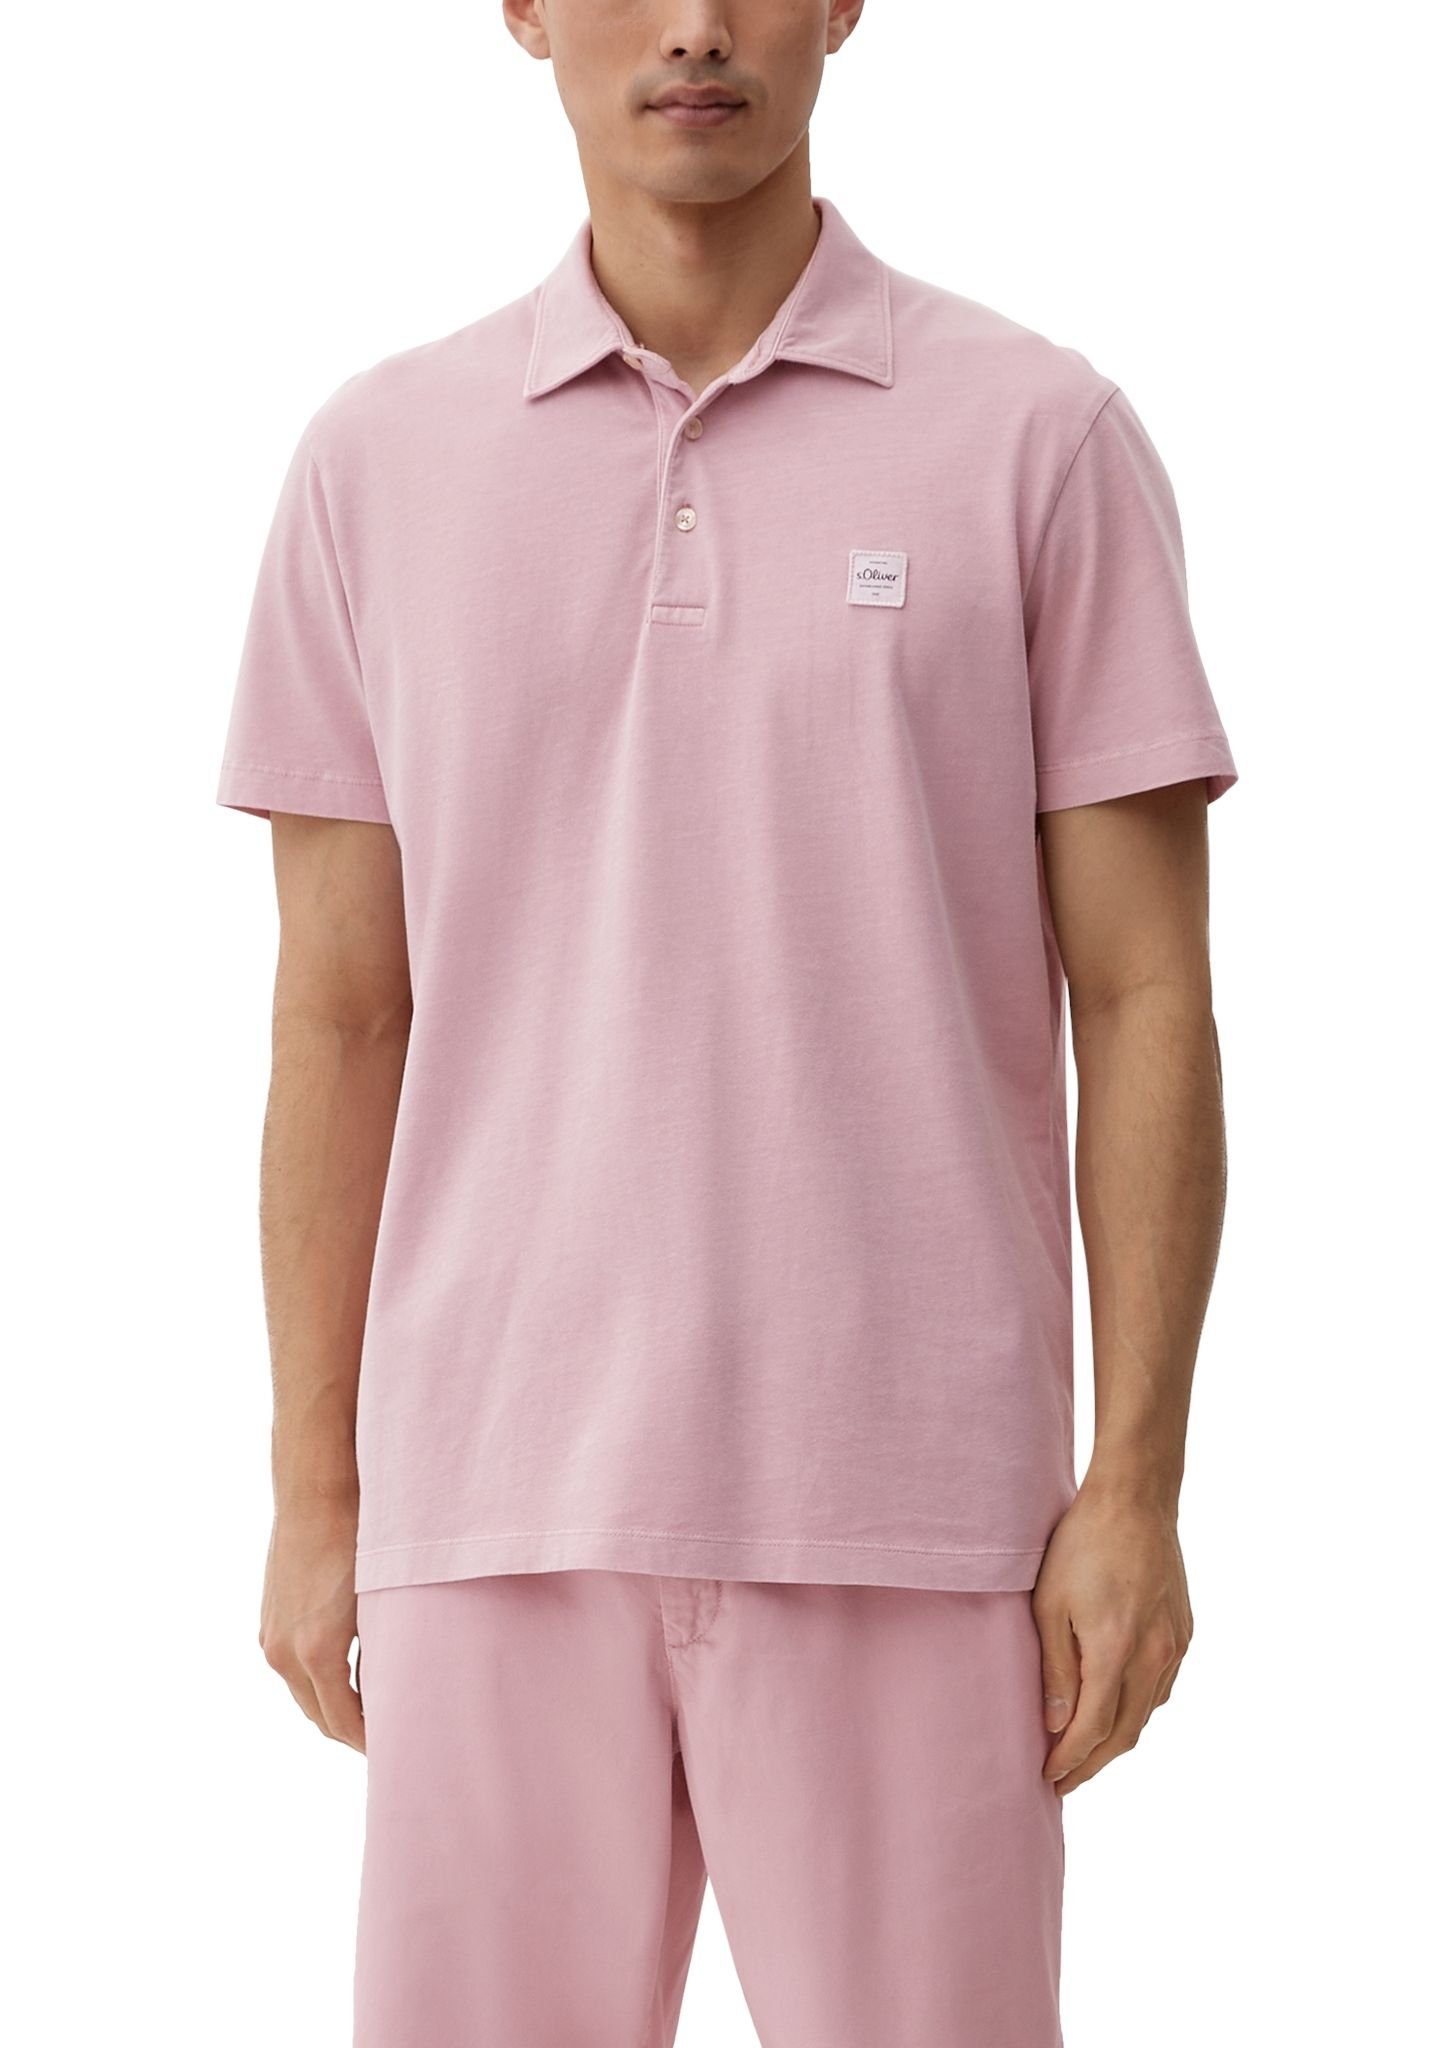 Kurzarmshirt pink s.Oliver